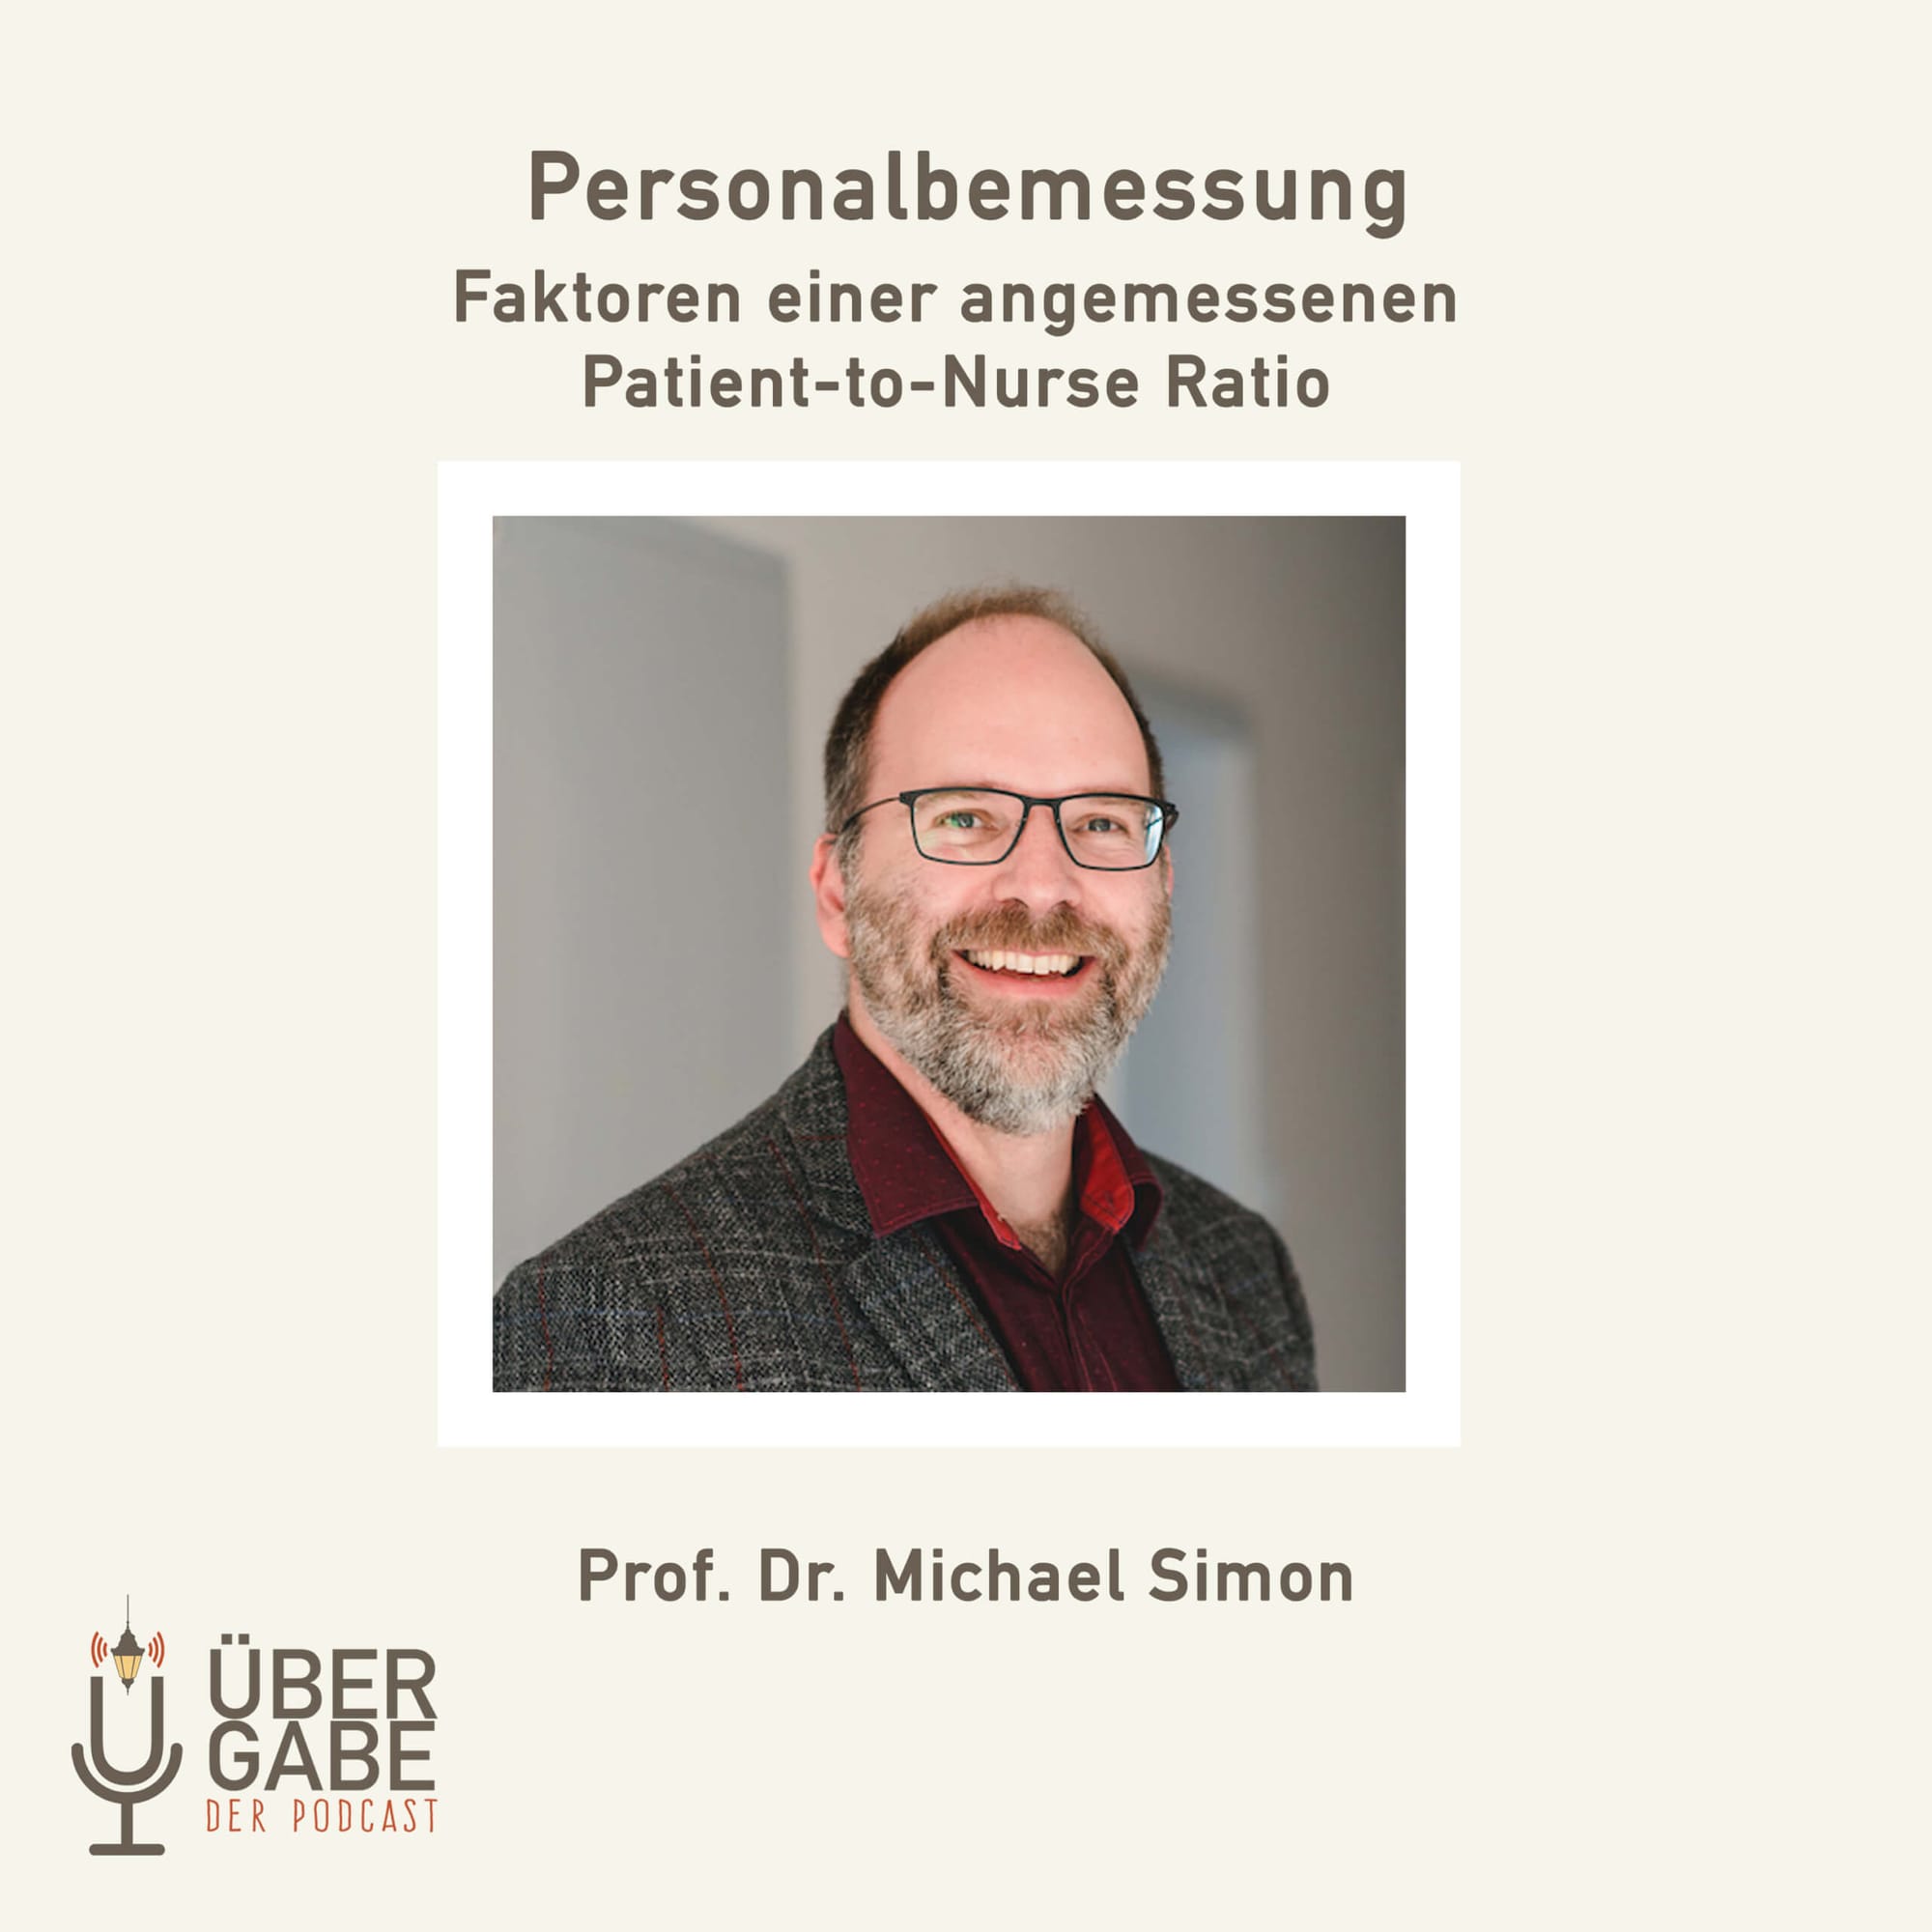 Personalbemessung und Patient-to-Nurse Ratio (Prof. Dr. Michael Simon)